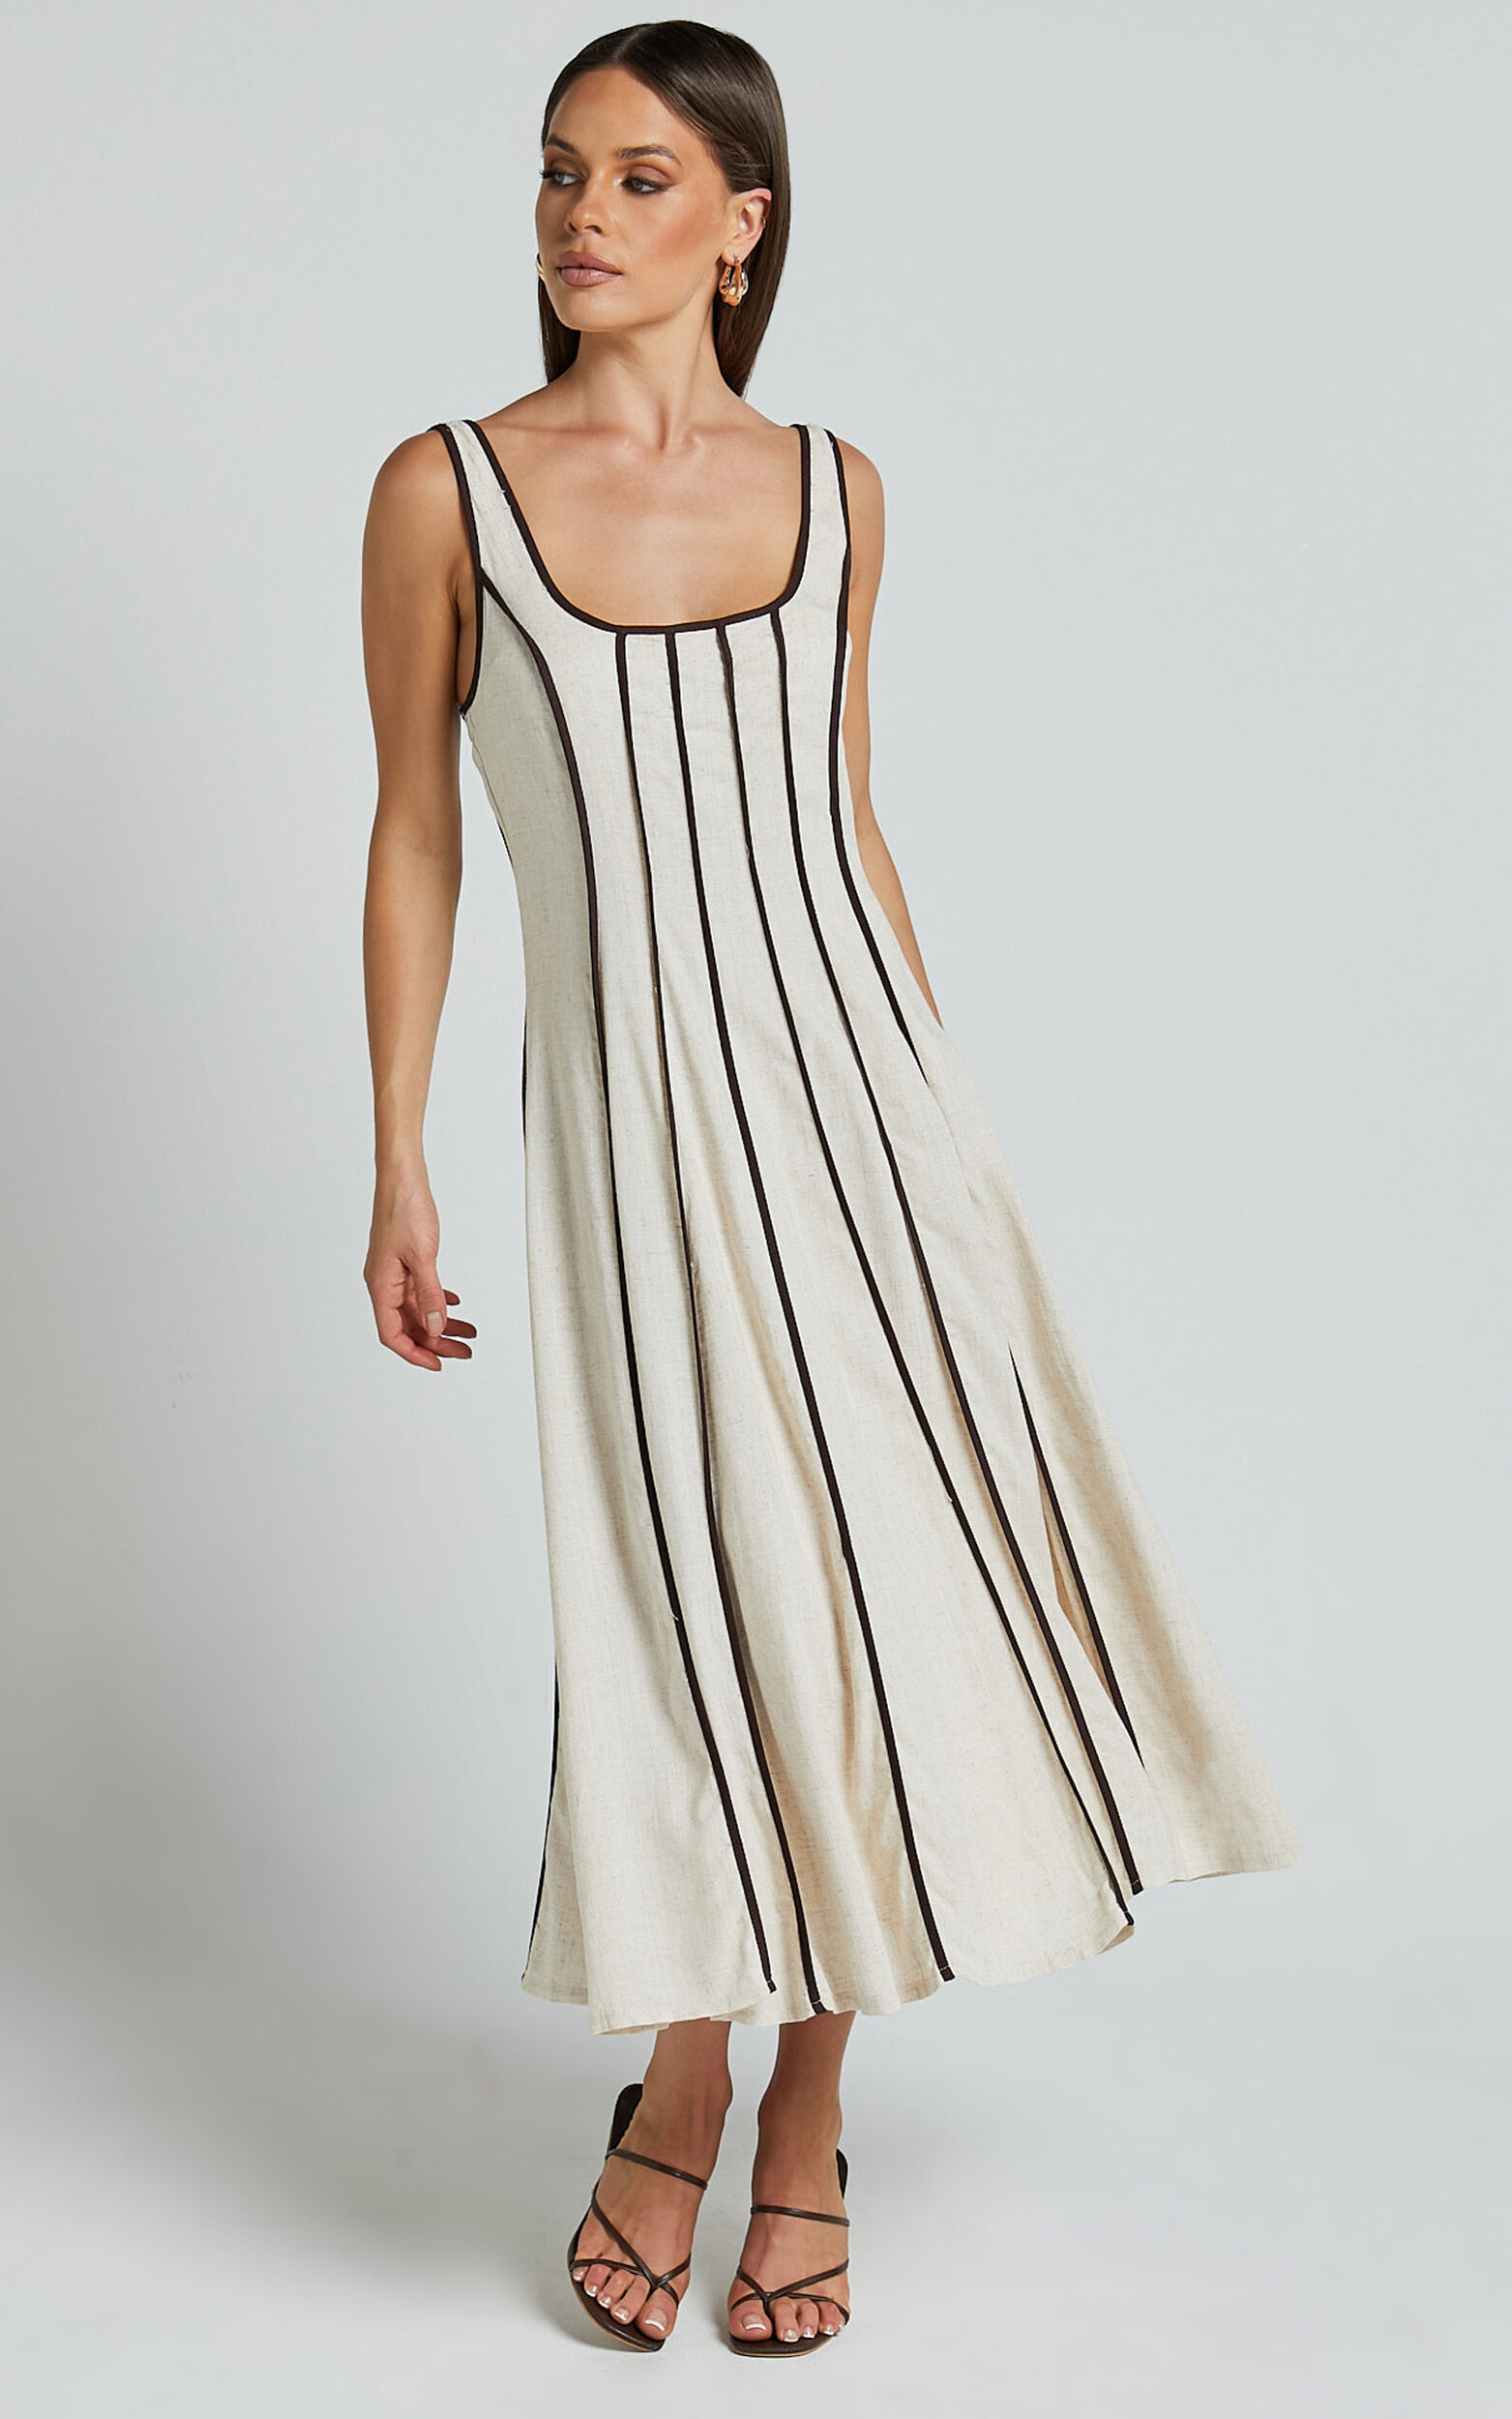 Yvette Midi Dress - Scoop Neck Sleeveless A Line Dress in Natural/Chocolate - 06, NEU1